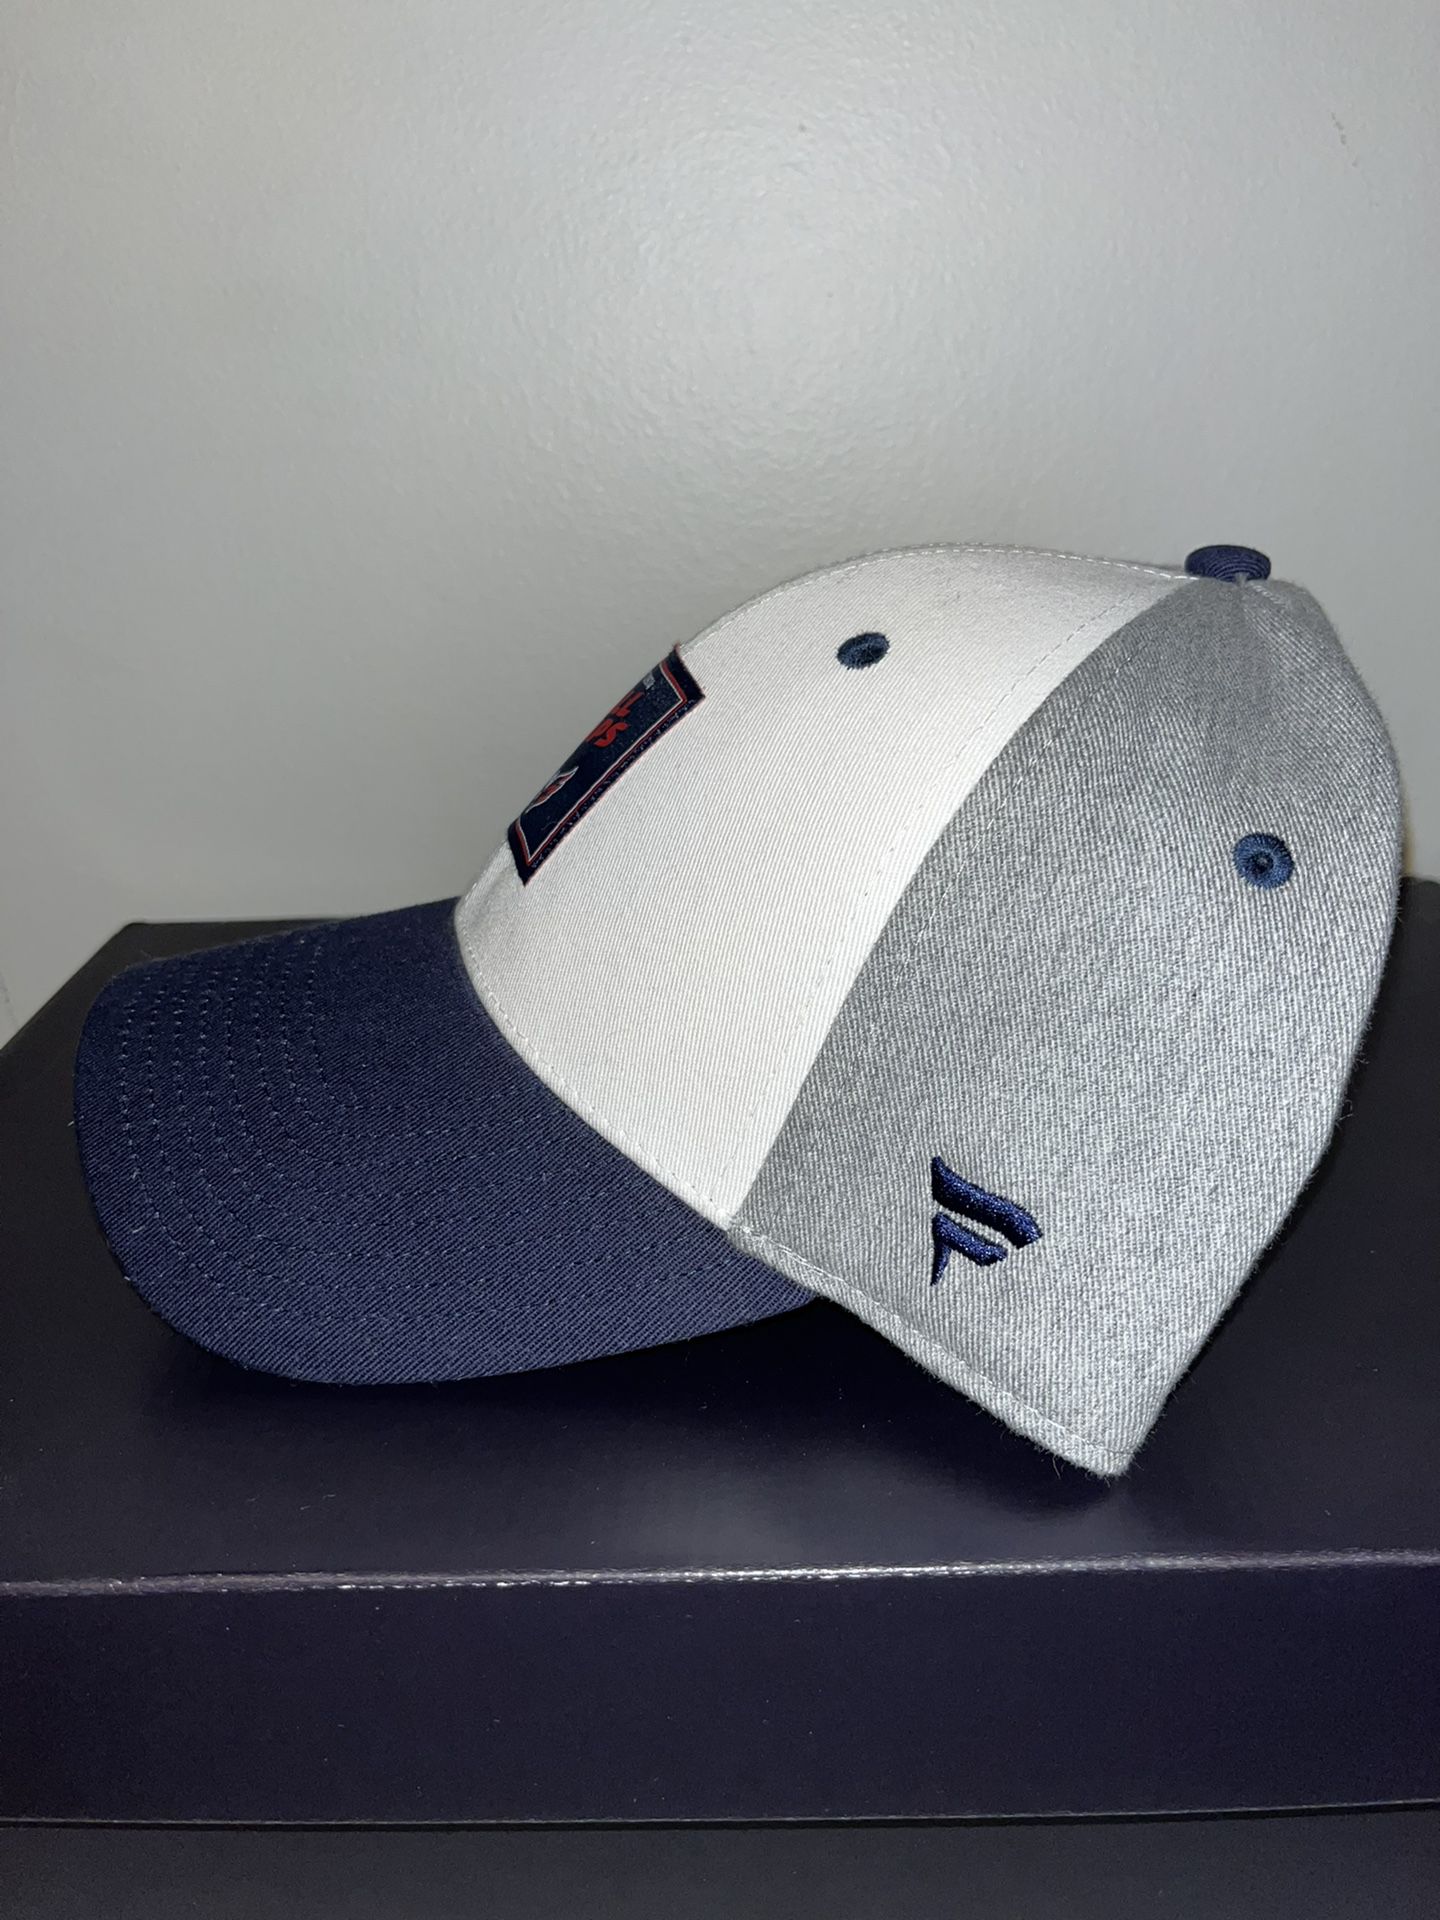 Washington Capitals “All Caps” Fanatics Brand Adjustable Baseball Hat 